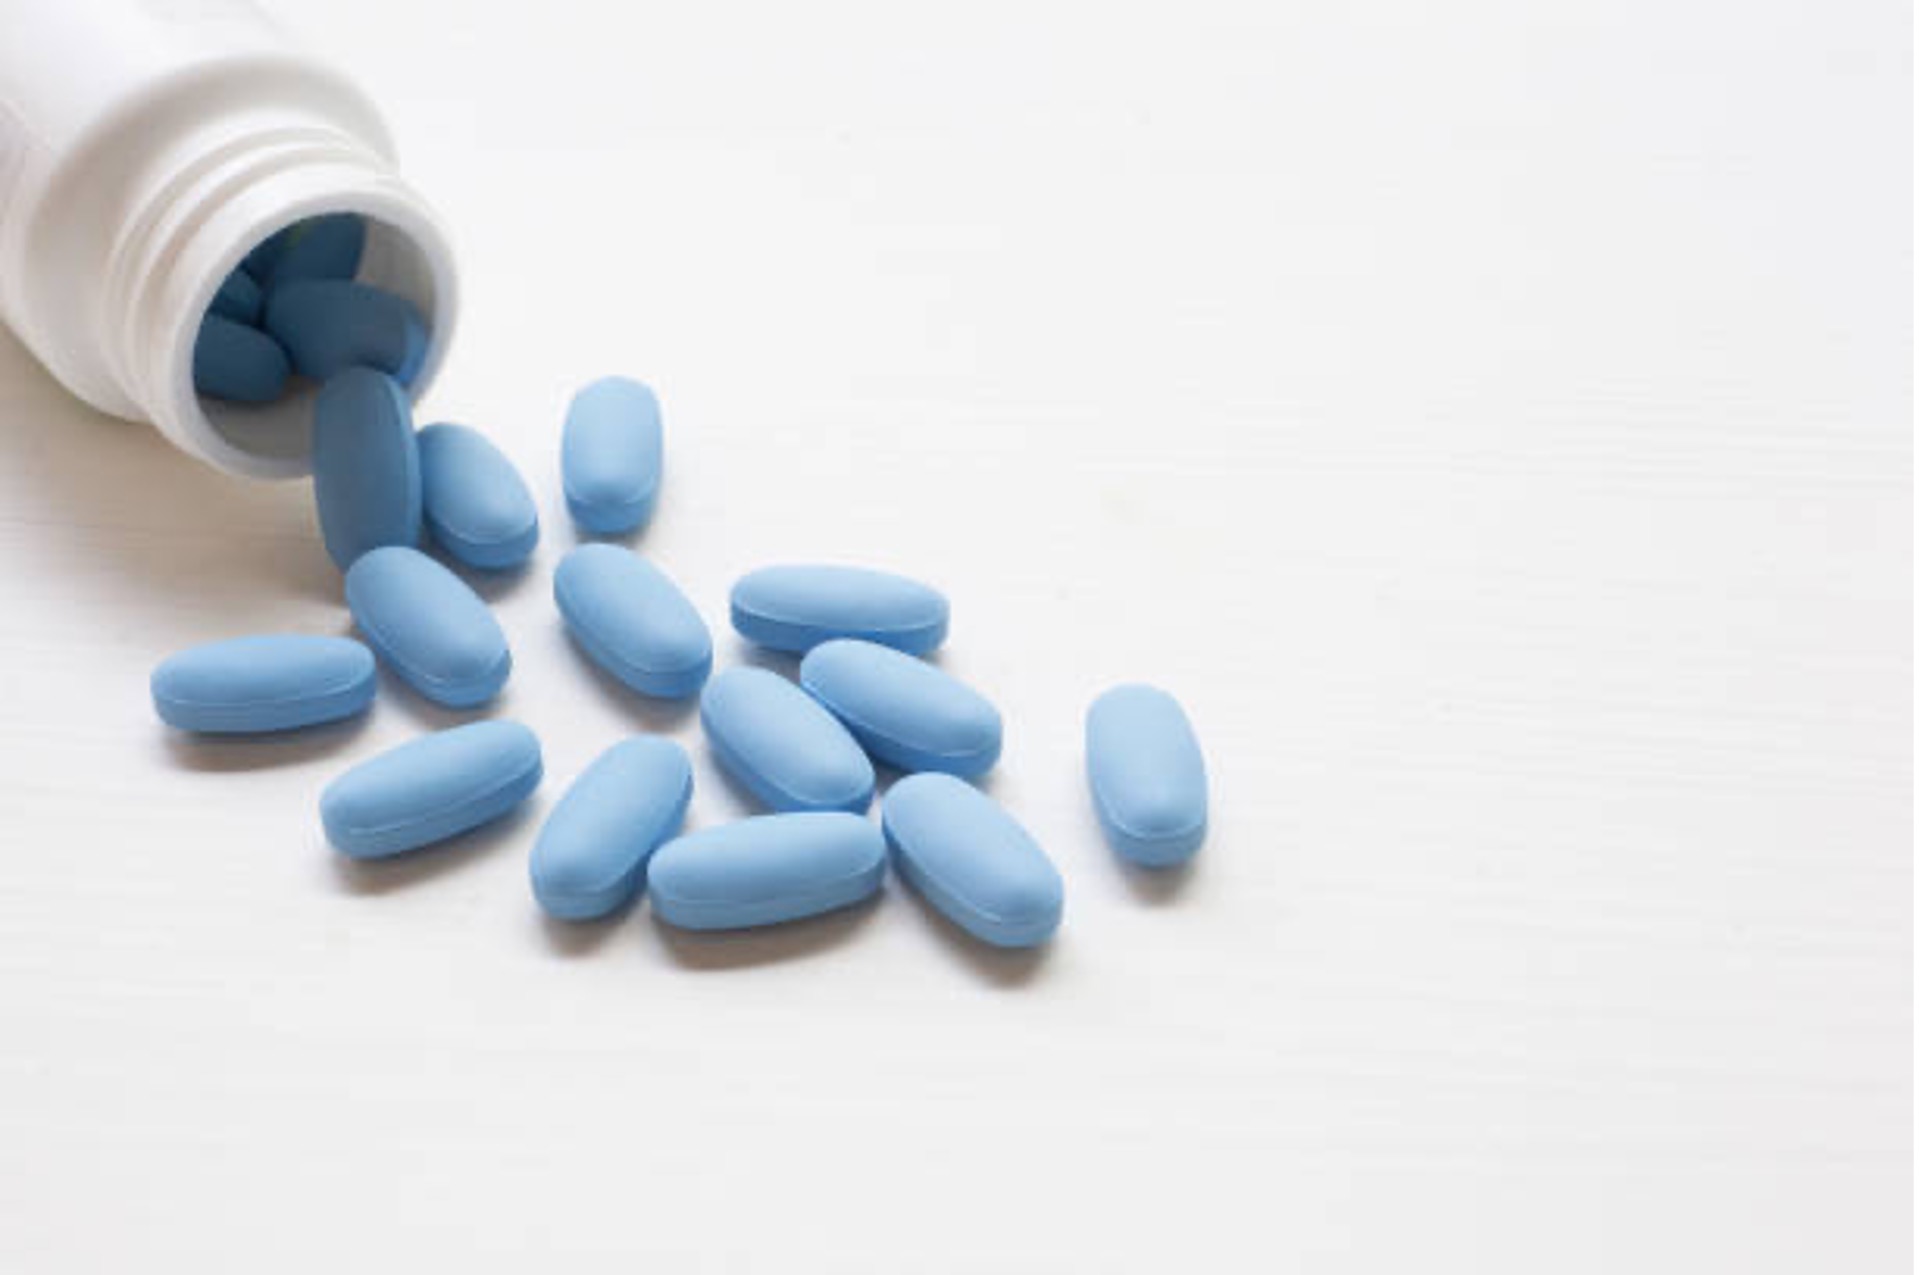 blue pills spilling from a white medicine bottle